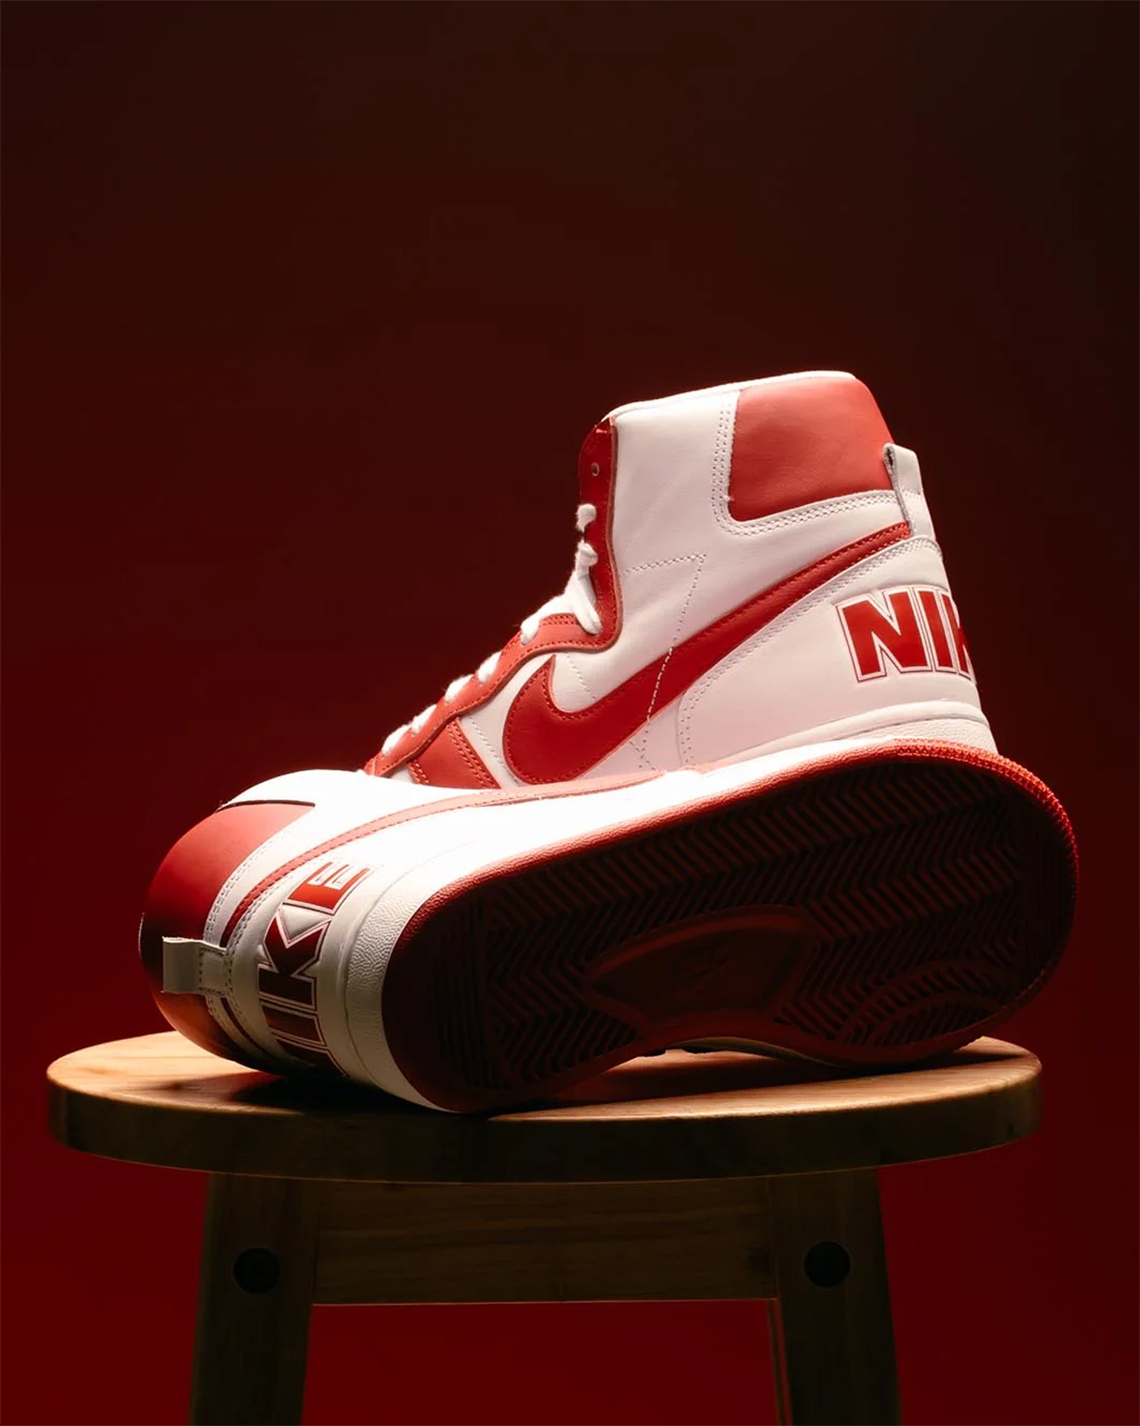 Where To Buy The Nike Terminator High “White/University Red”